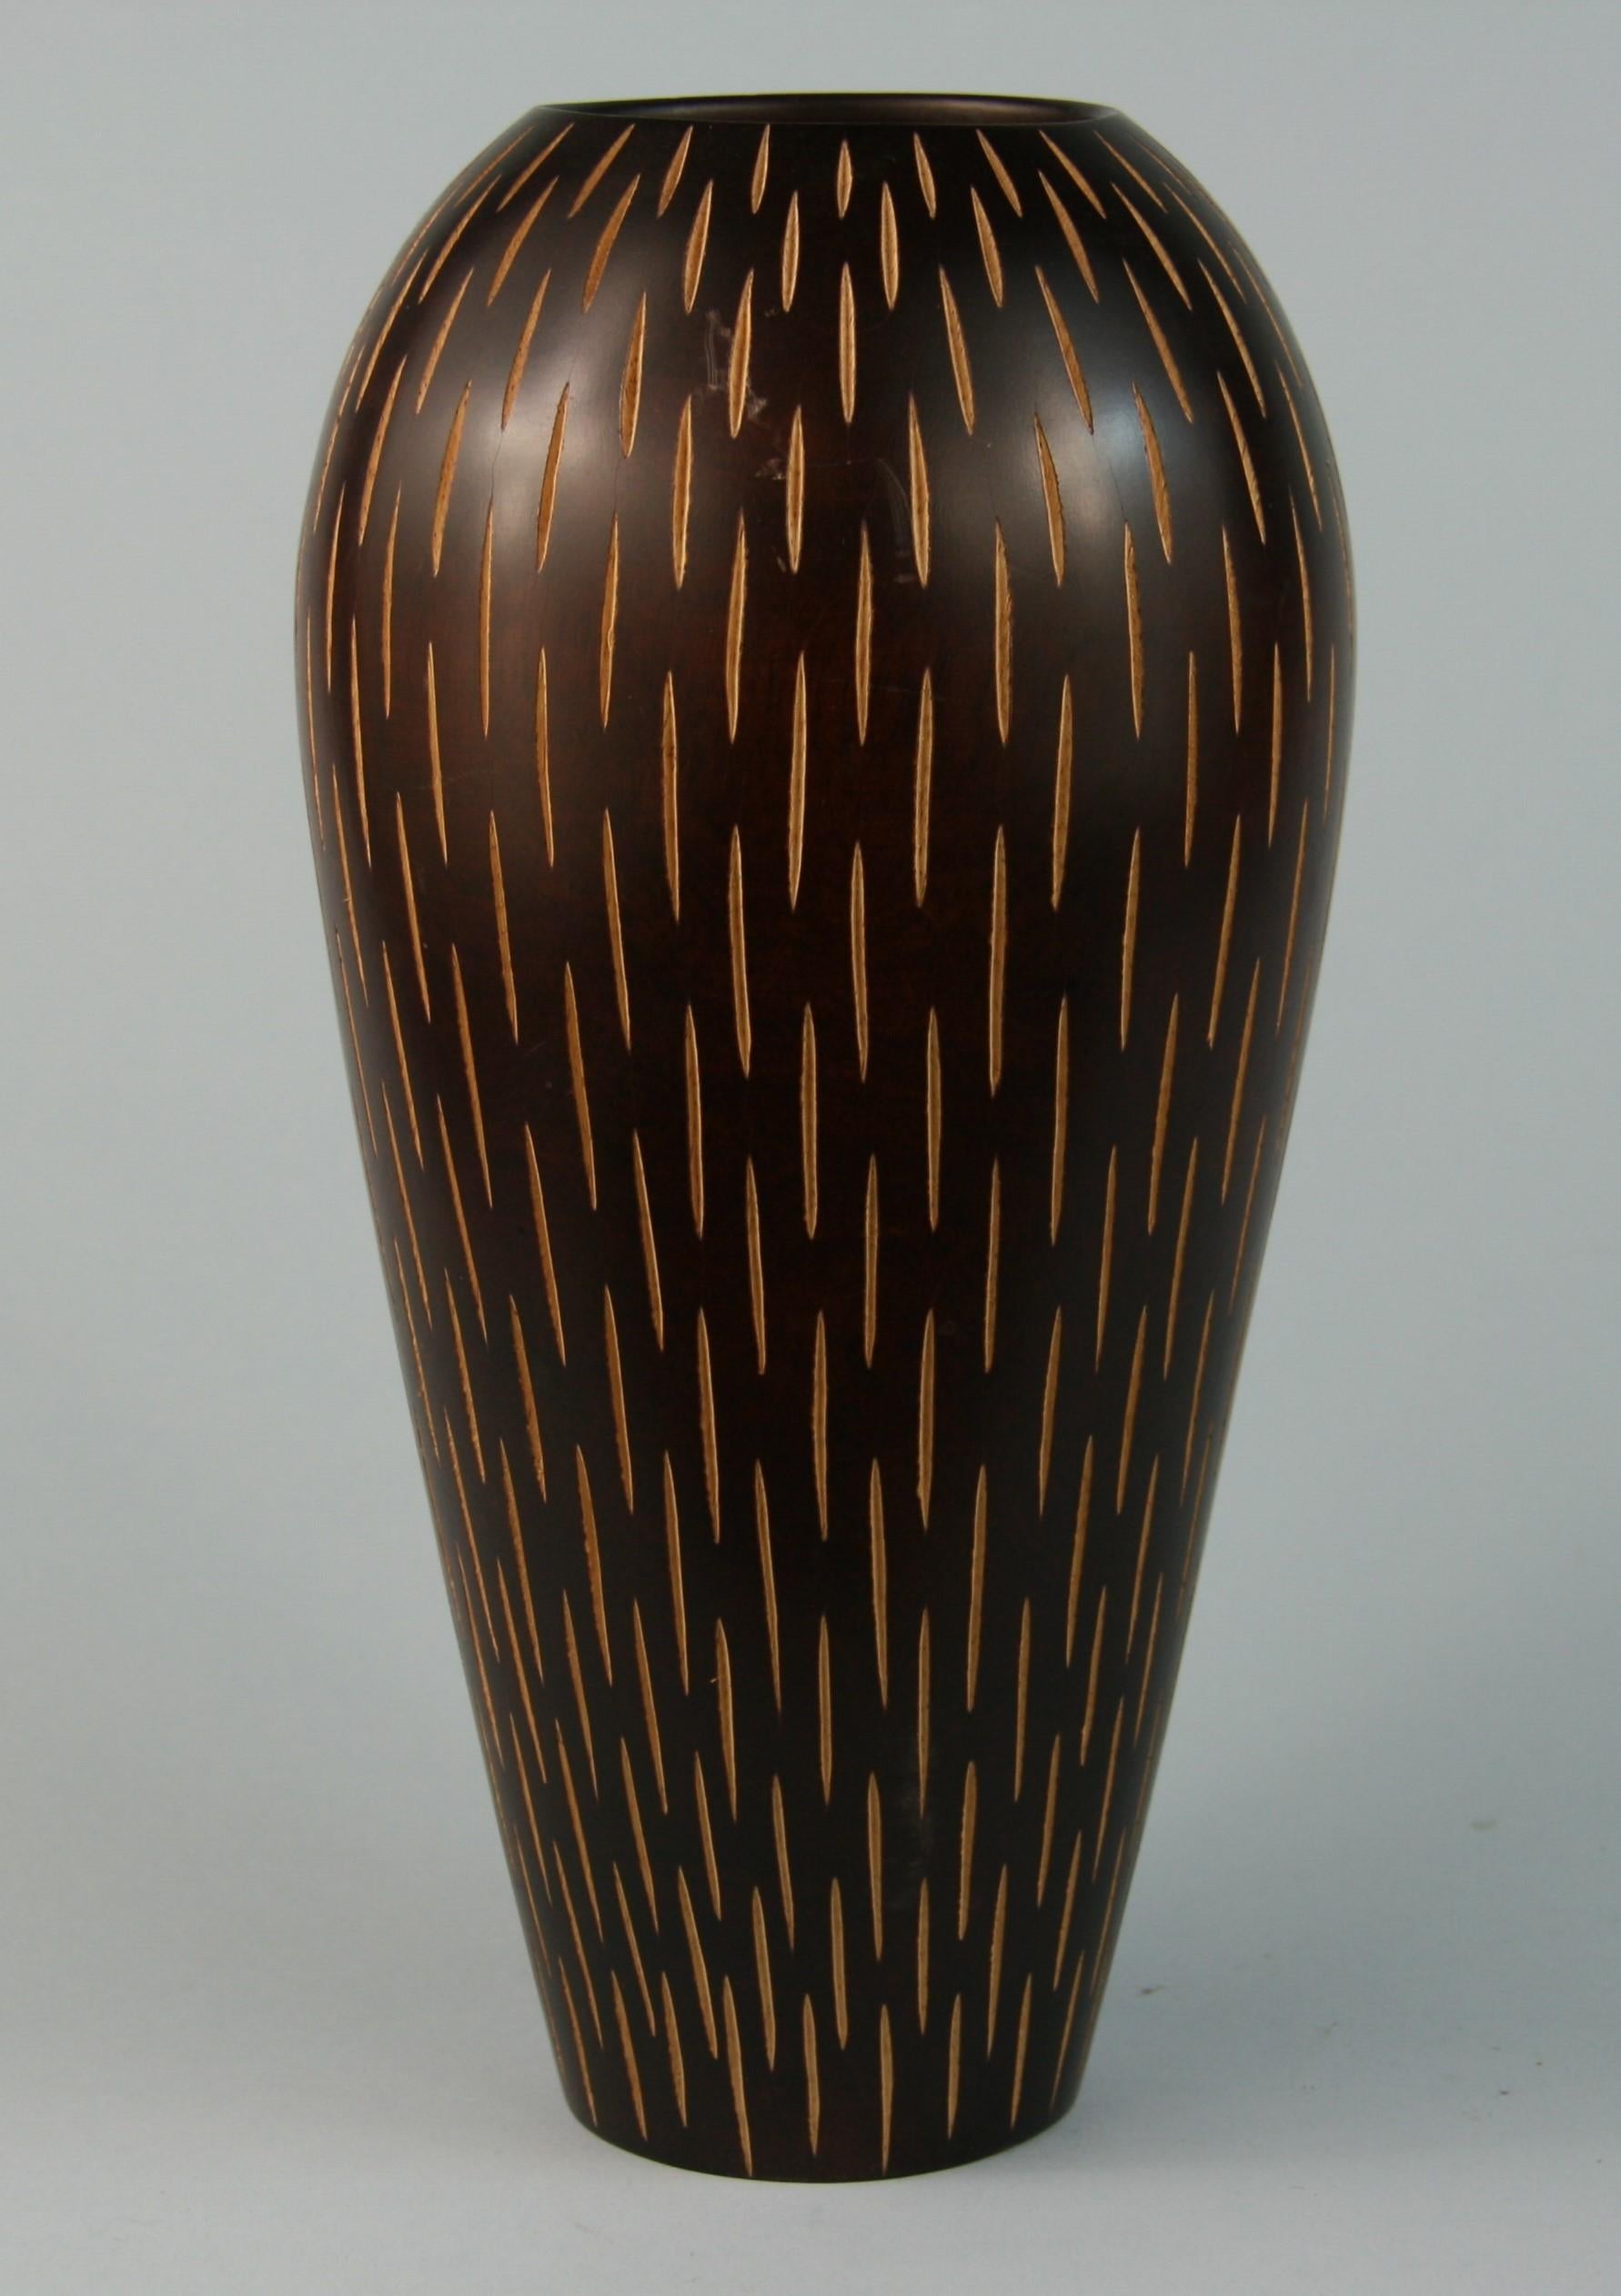 3-616 Japanese hand turned wood vase with vertical slits.